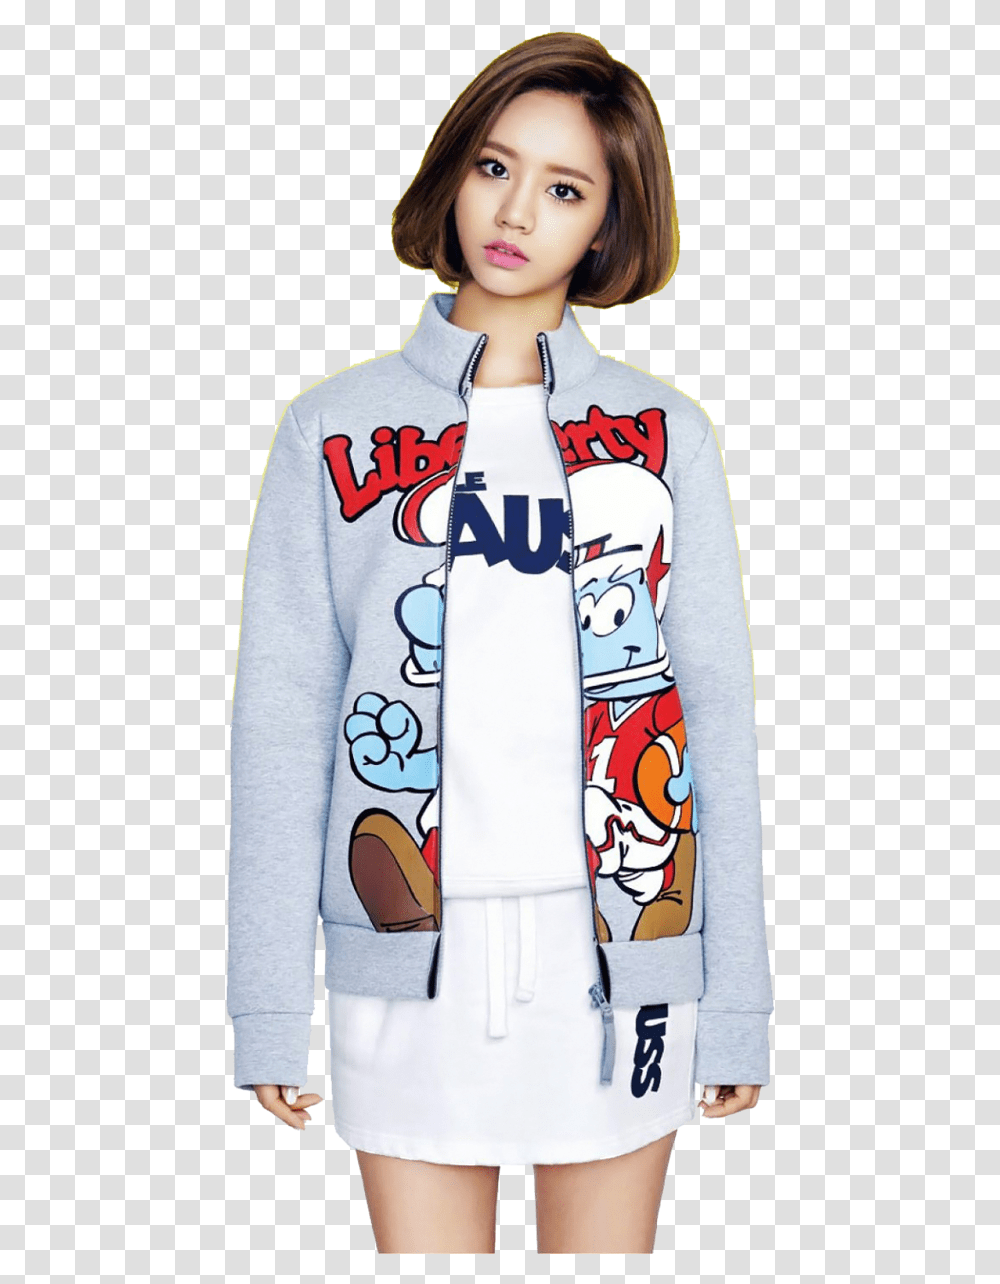 Girls Image V Hyeri Short Hair, Apparel, Sleeve, Sweatshirt Transparent Png